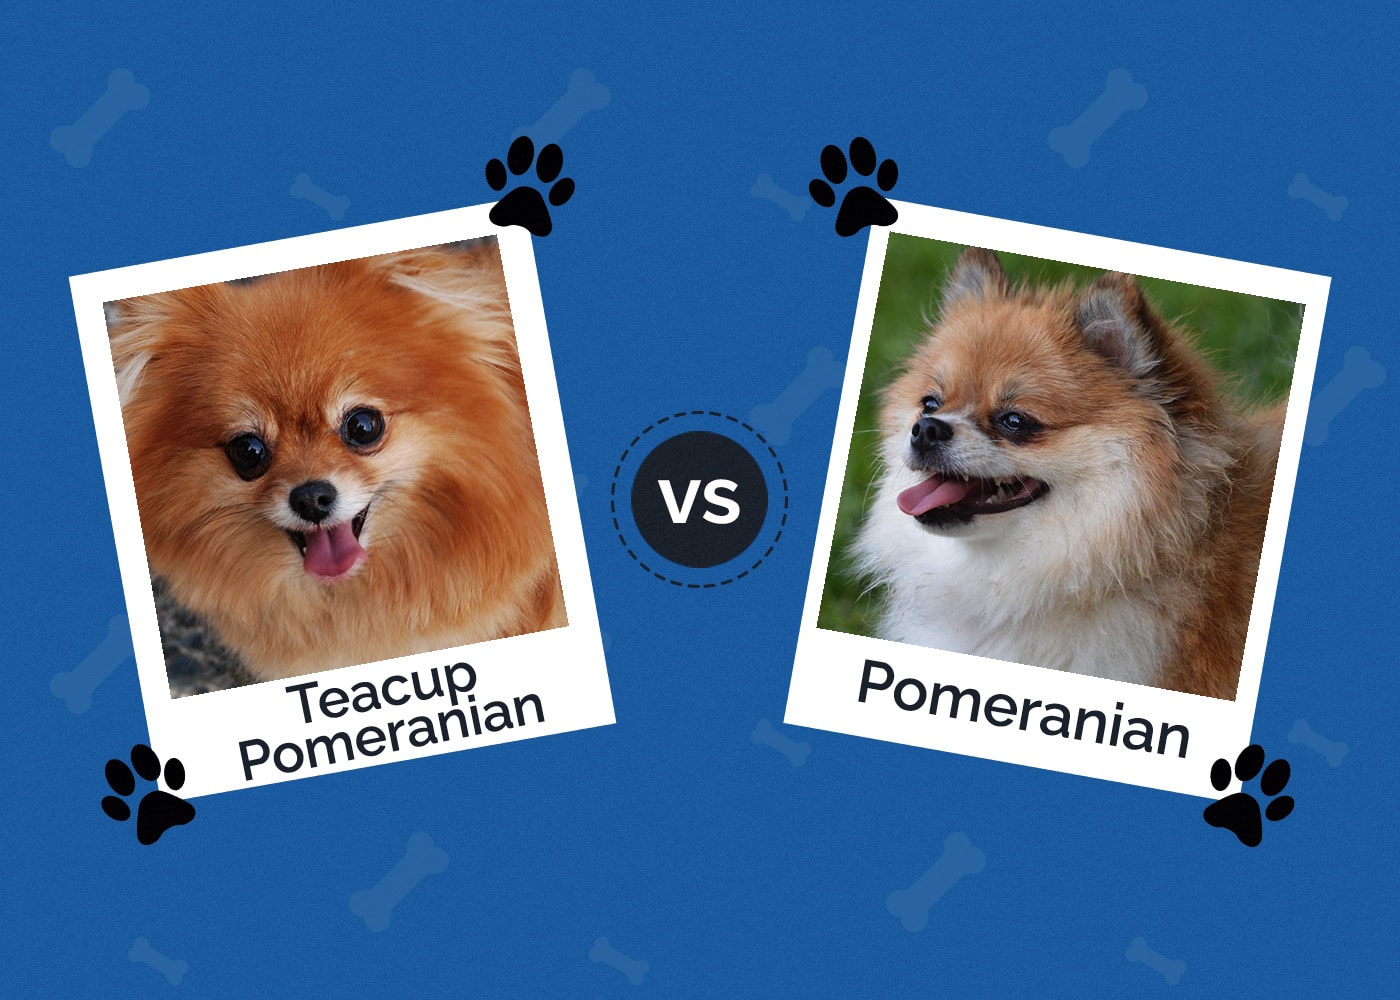 Teacup Pomeranian vs Pomeranian